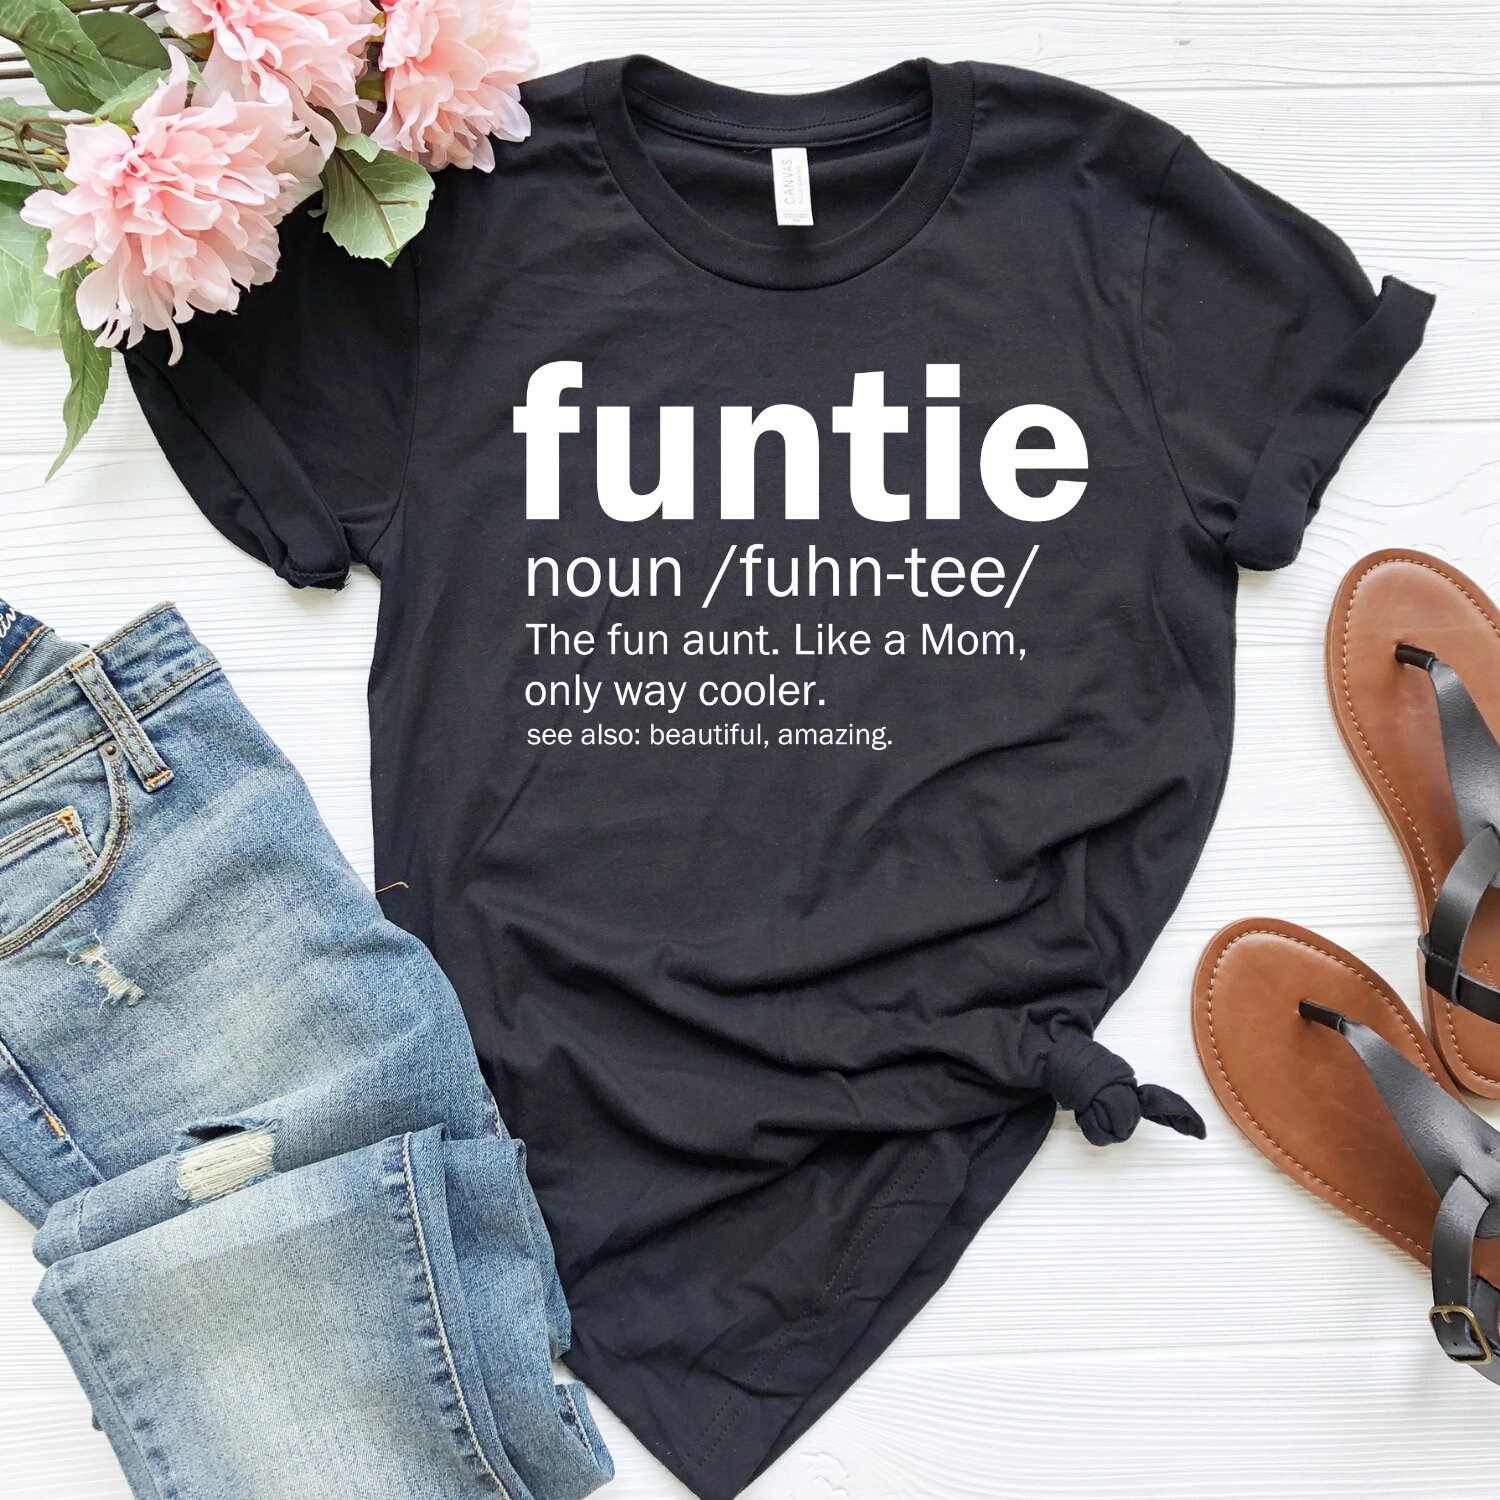 Auntie Is My Bestie Shirt Gift For Auntie Best Auntie Ever Shirt Mother/'s Day Shirt Aunt Shirt Funny Aunt Shirt World/'s Bes Aunt